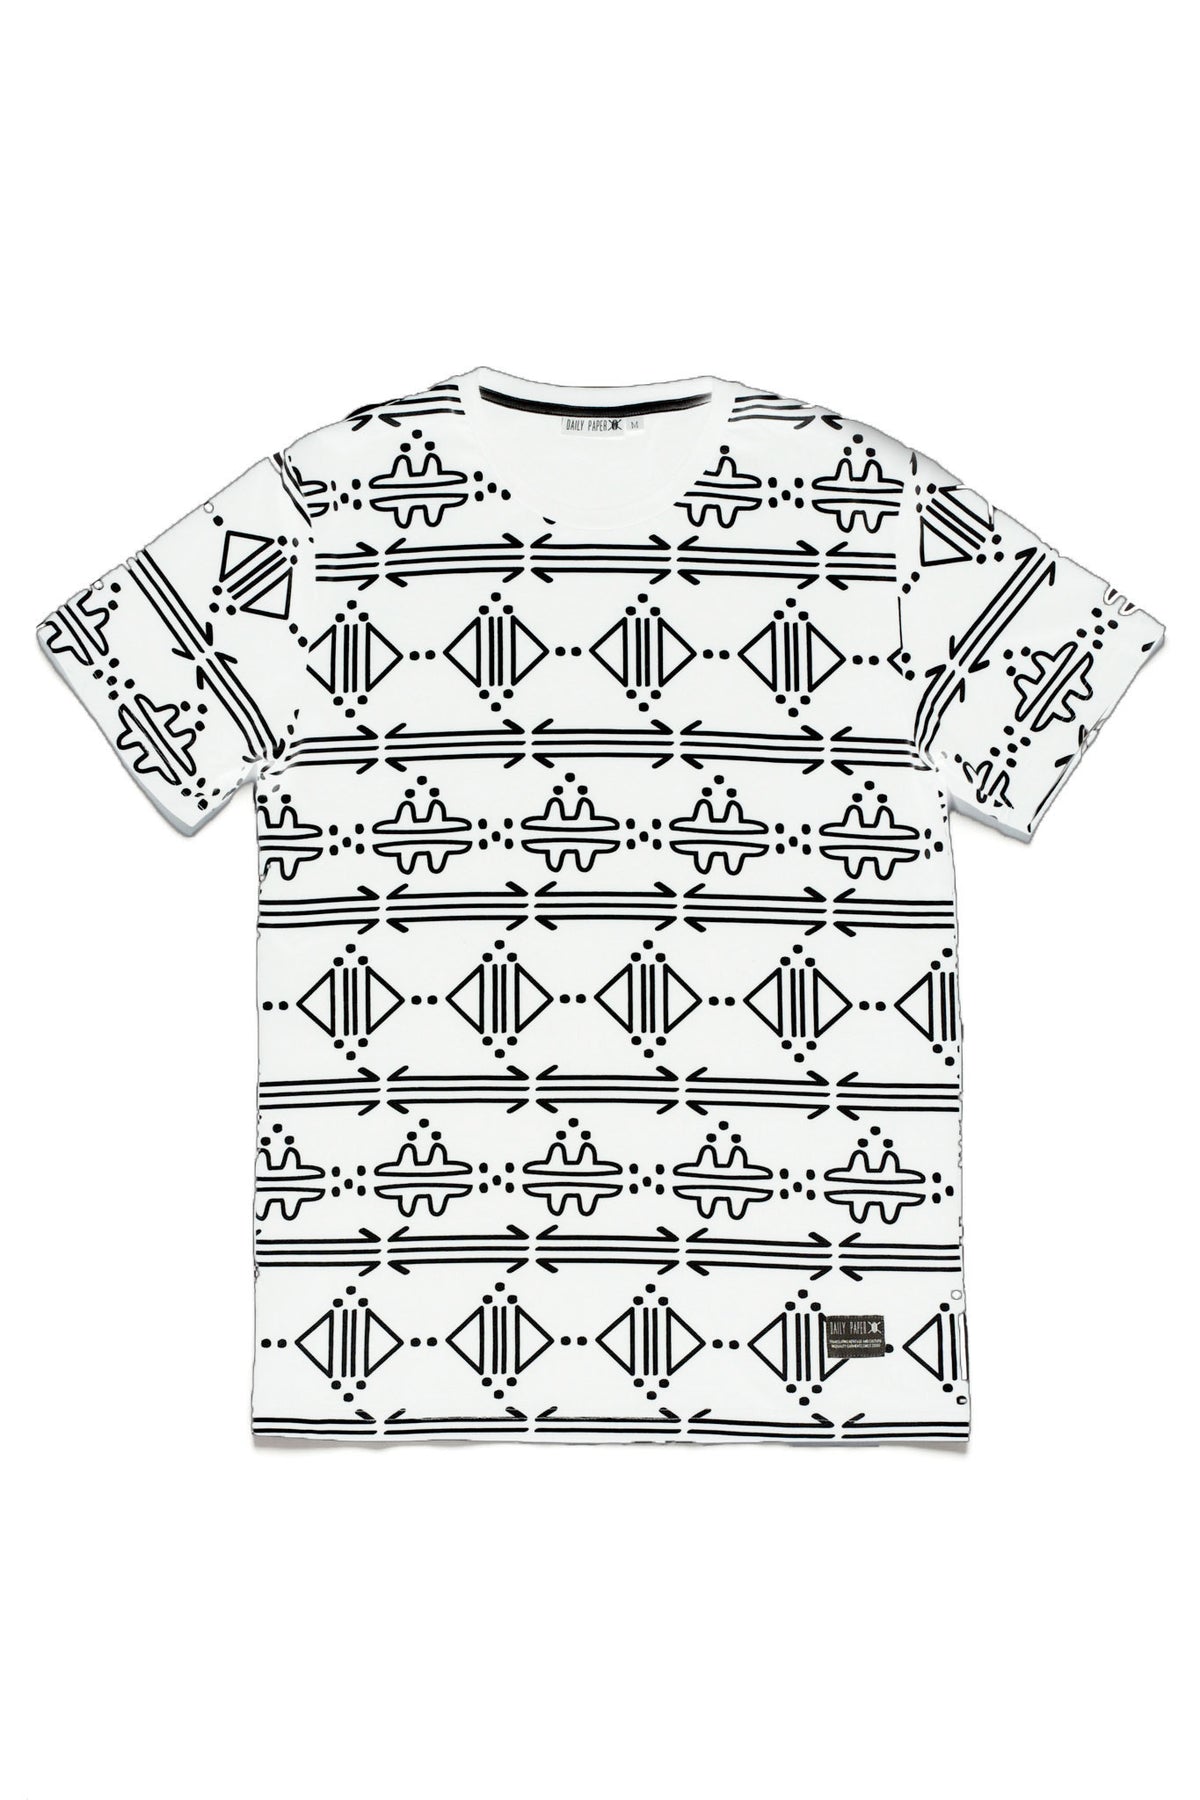 Daily Paper White/Black Berber Life Elements T-Shirt